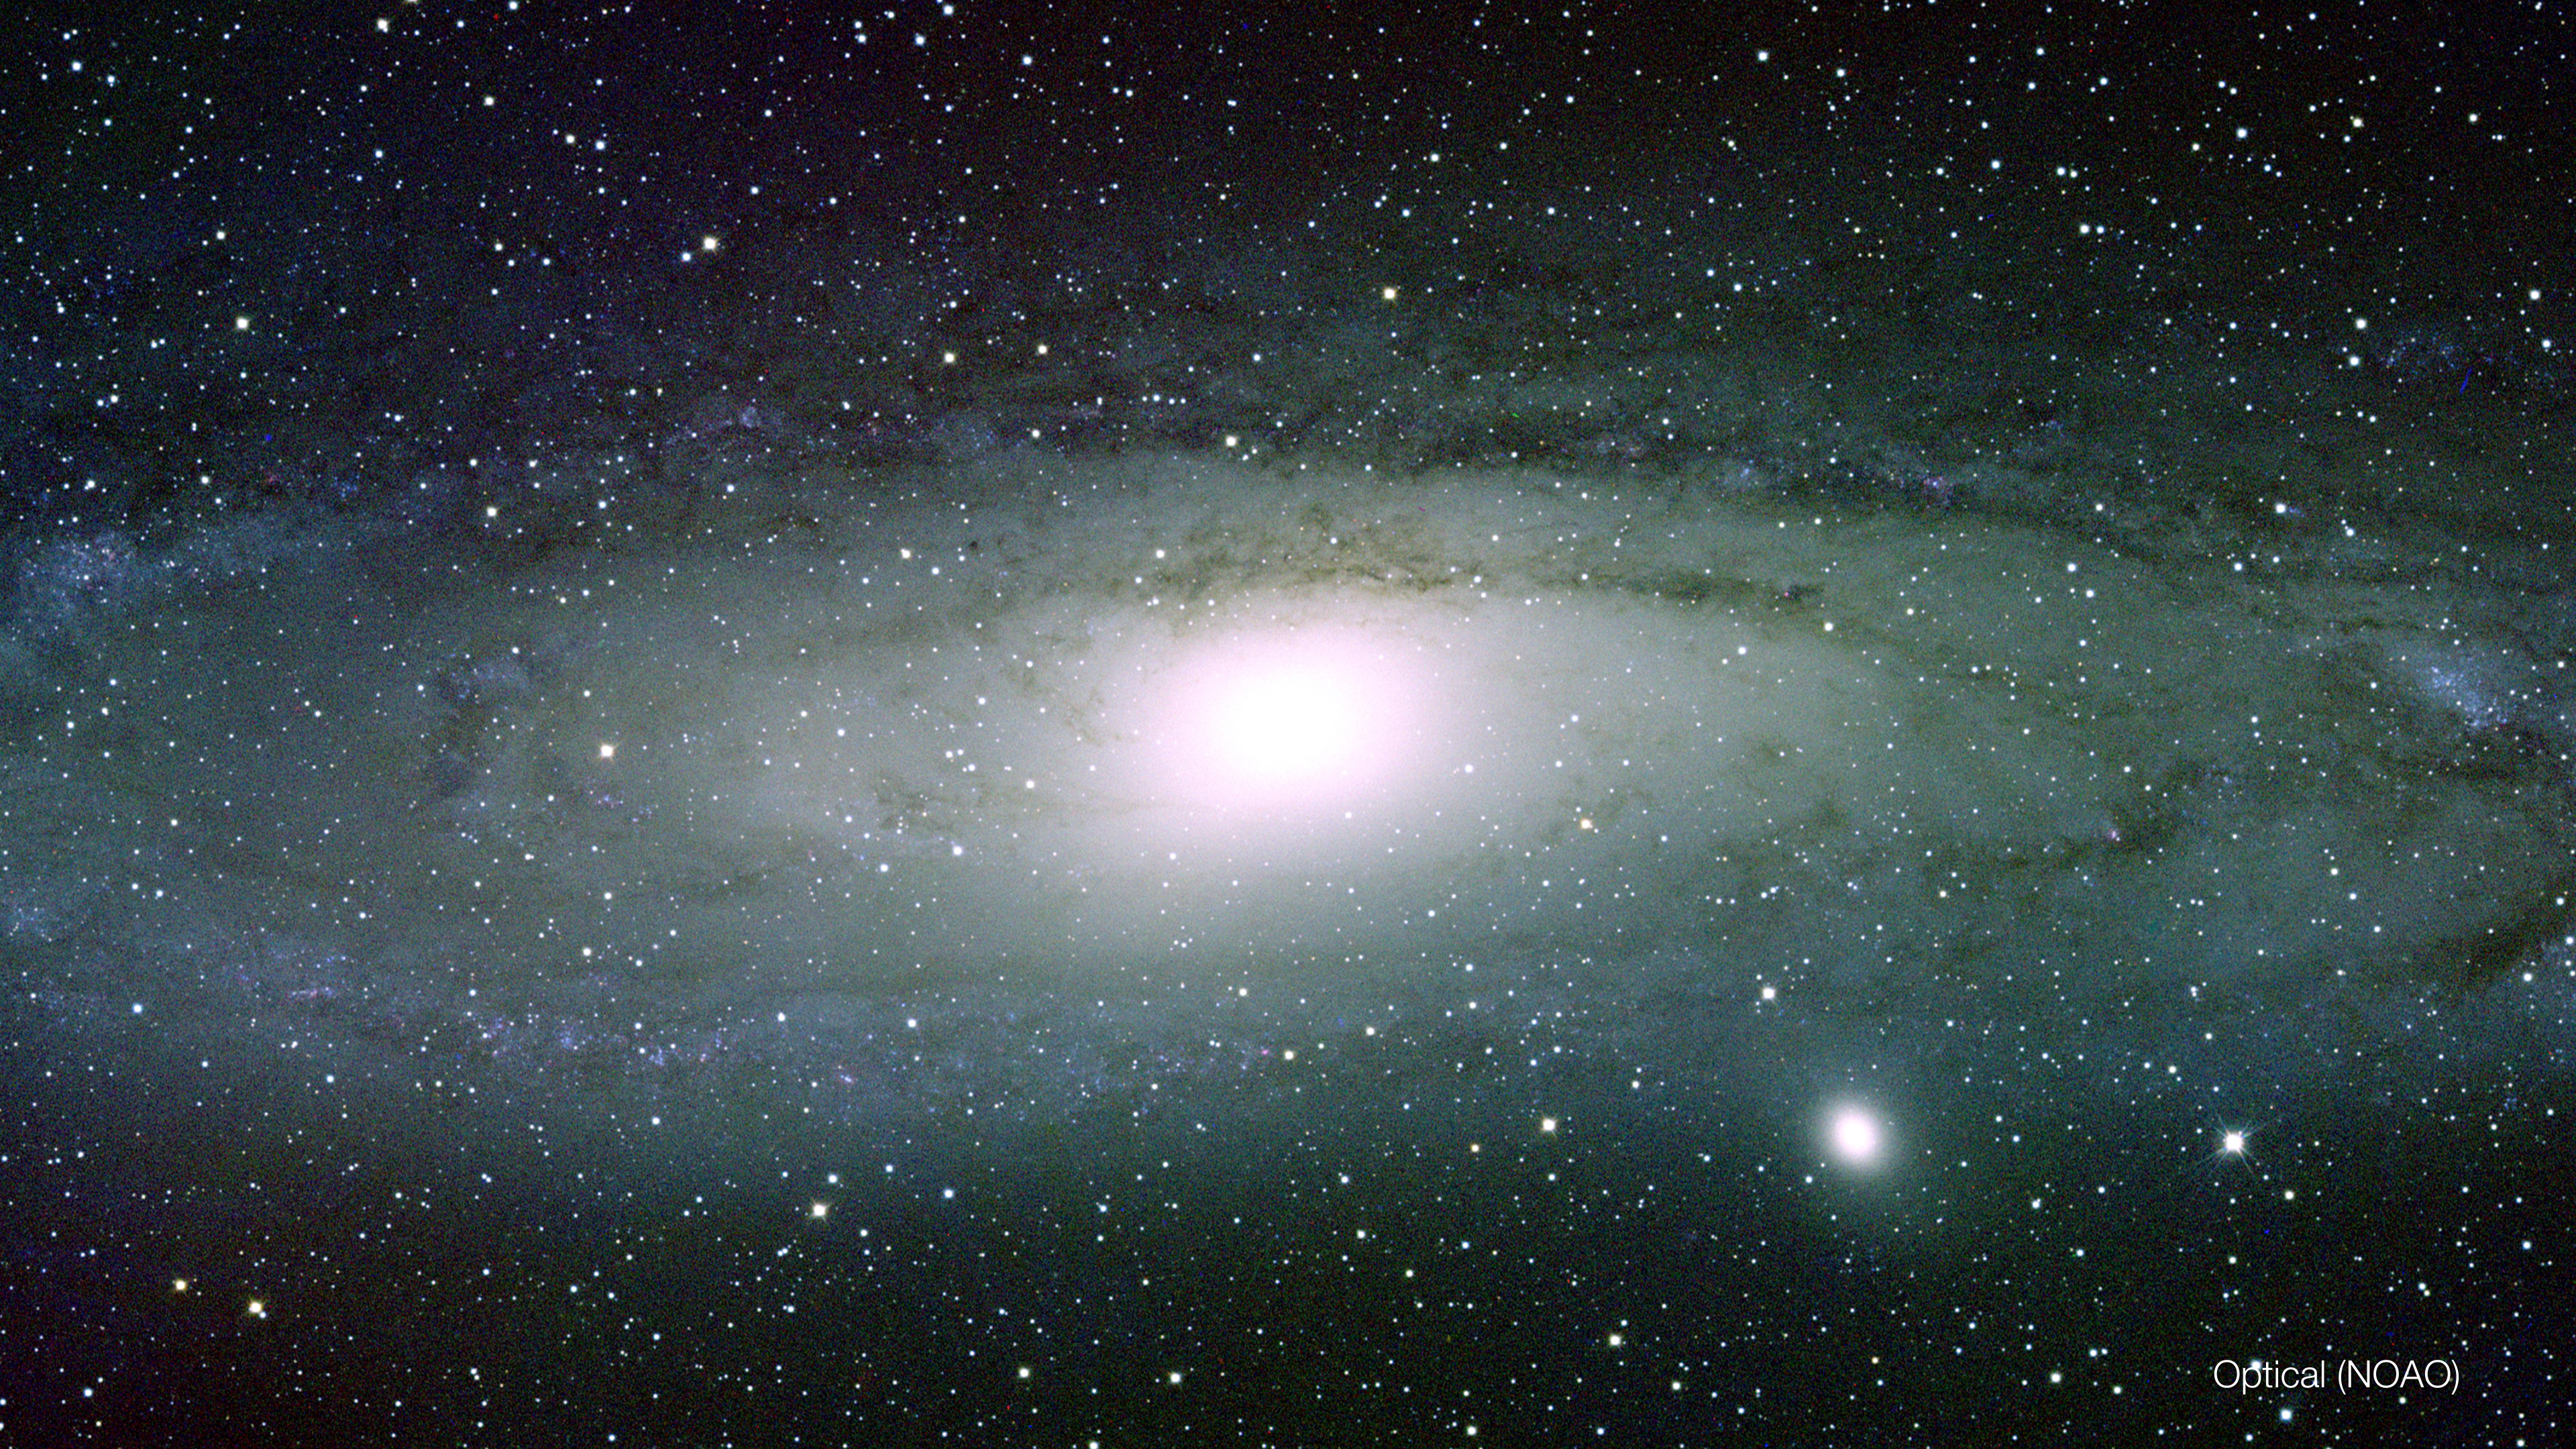 - Andromeda Galaxy in Visible and Infrared